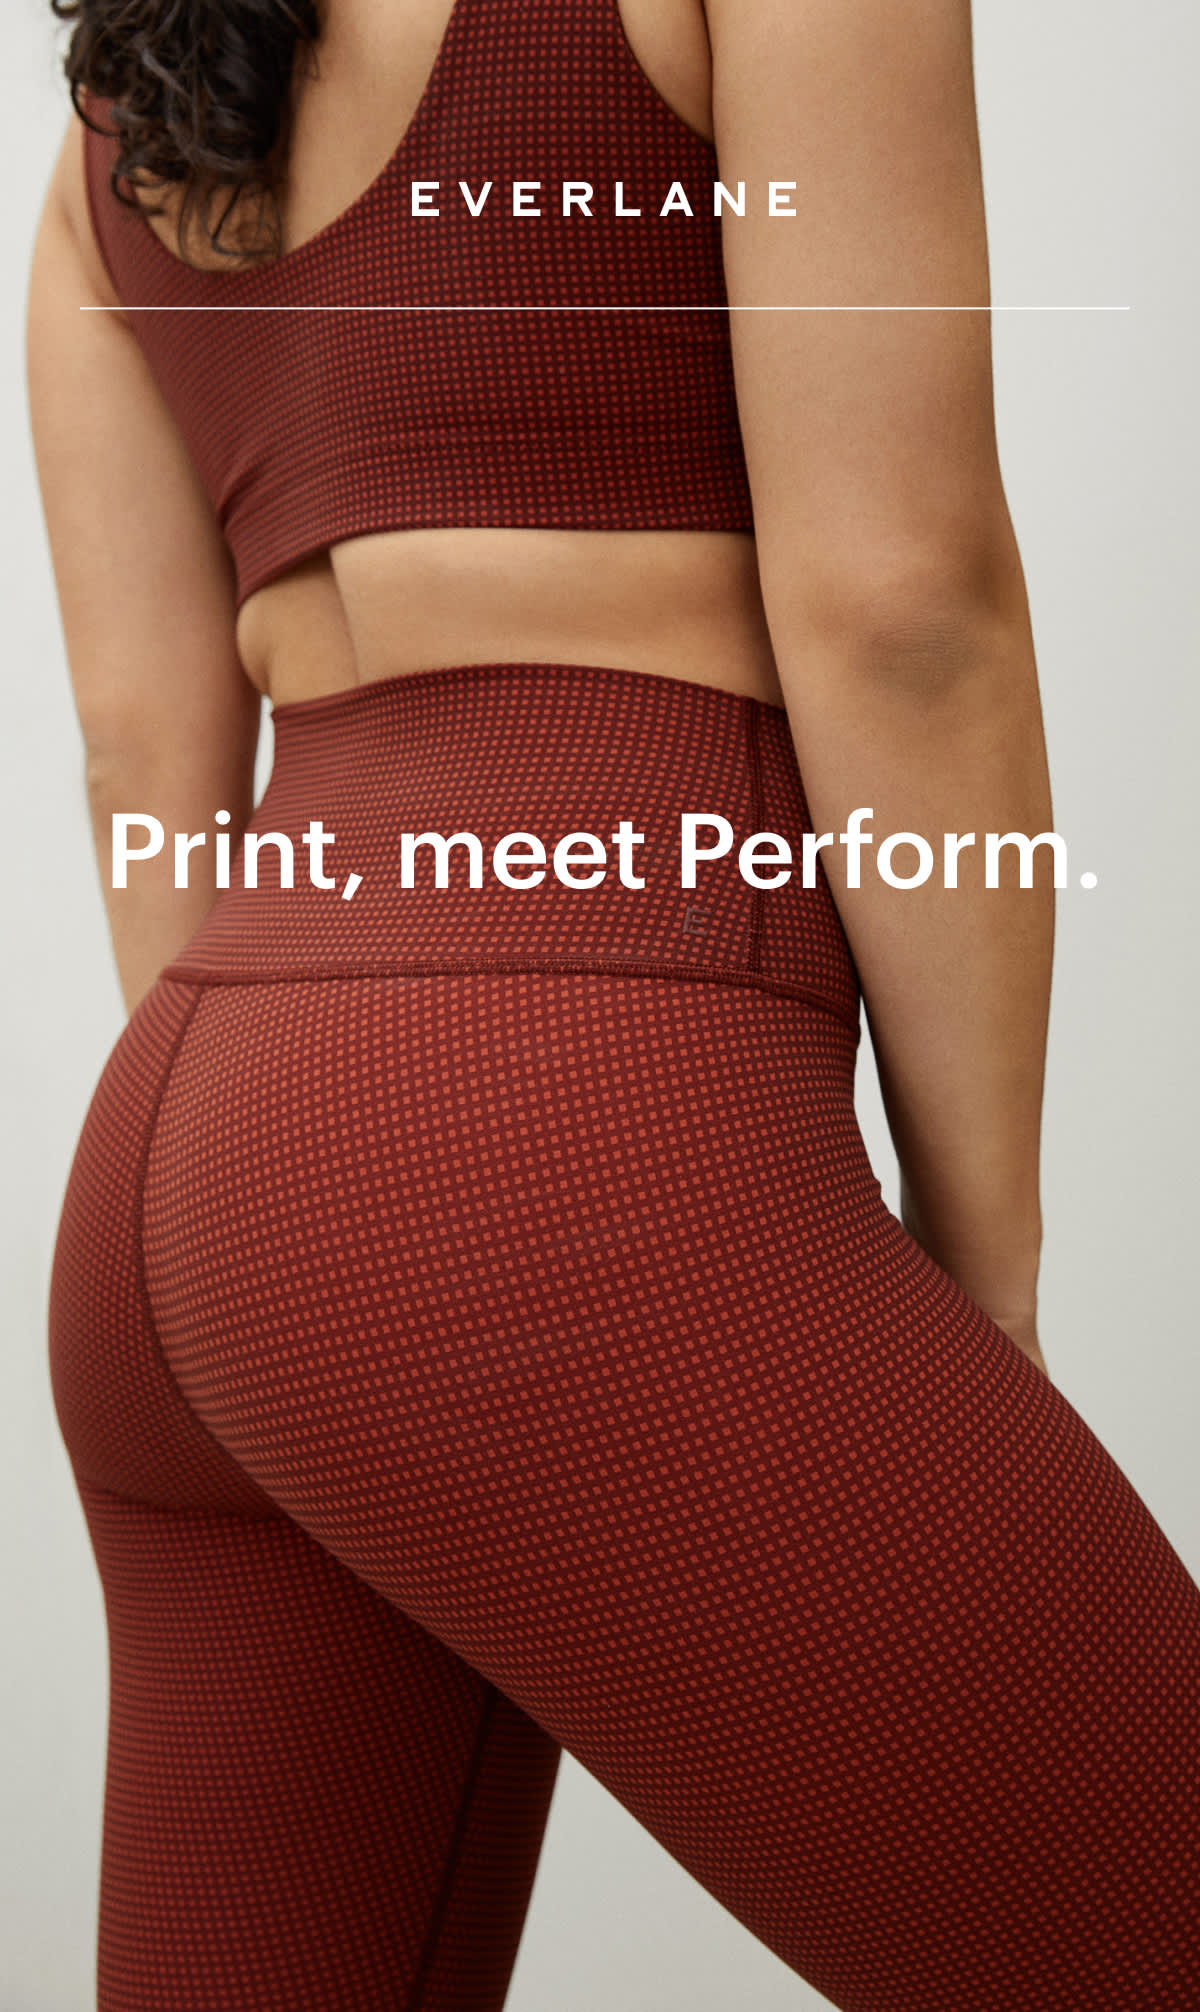 Print, meet Perform.